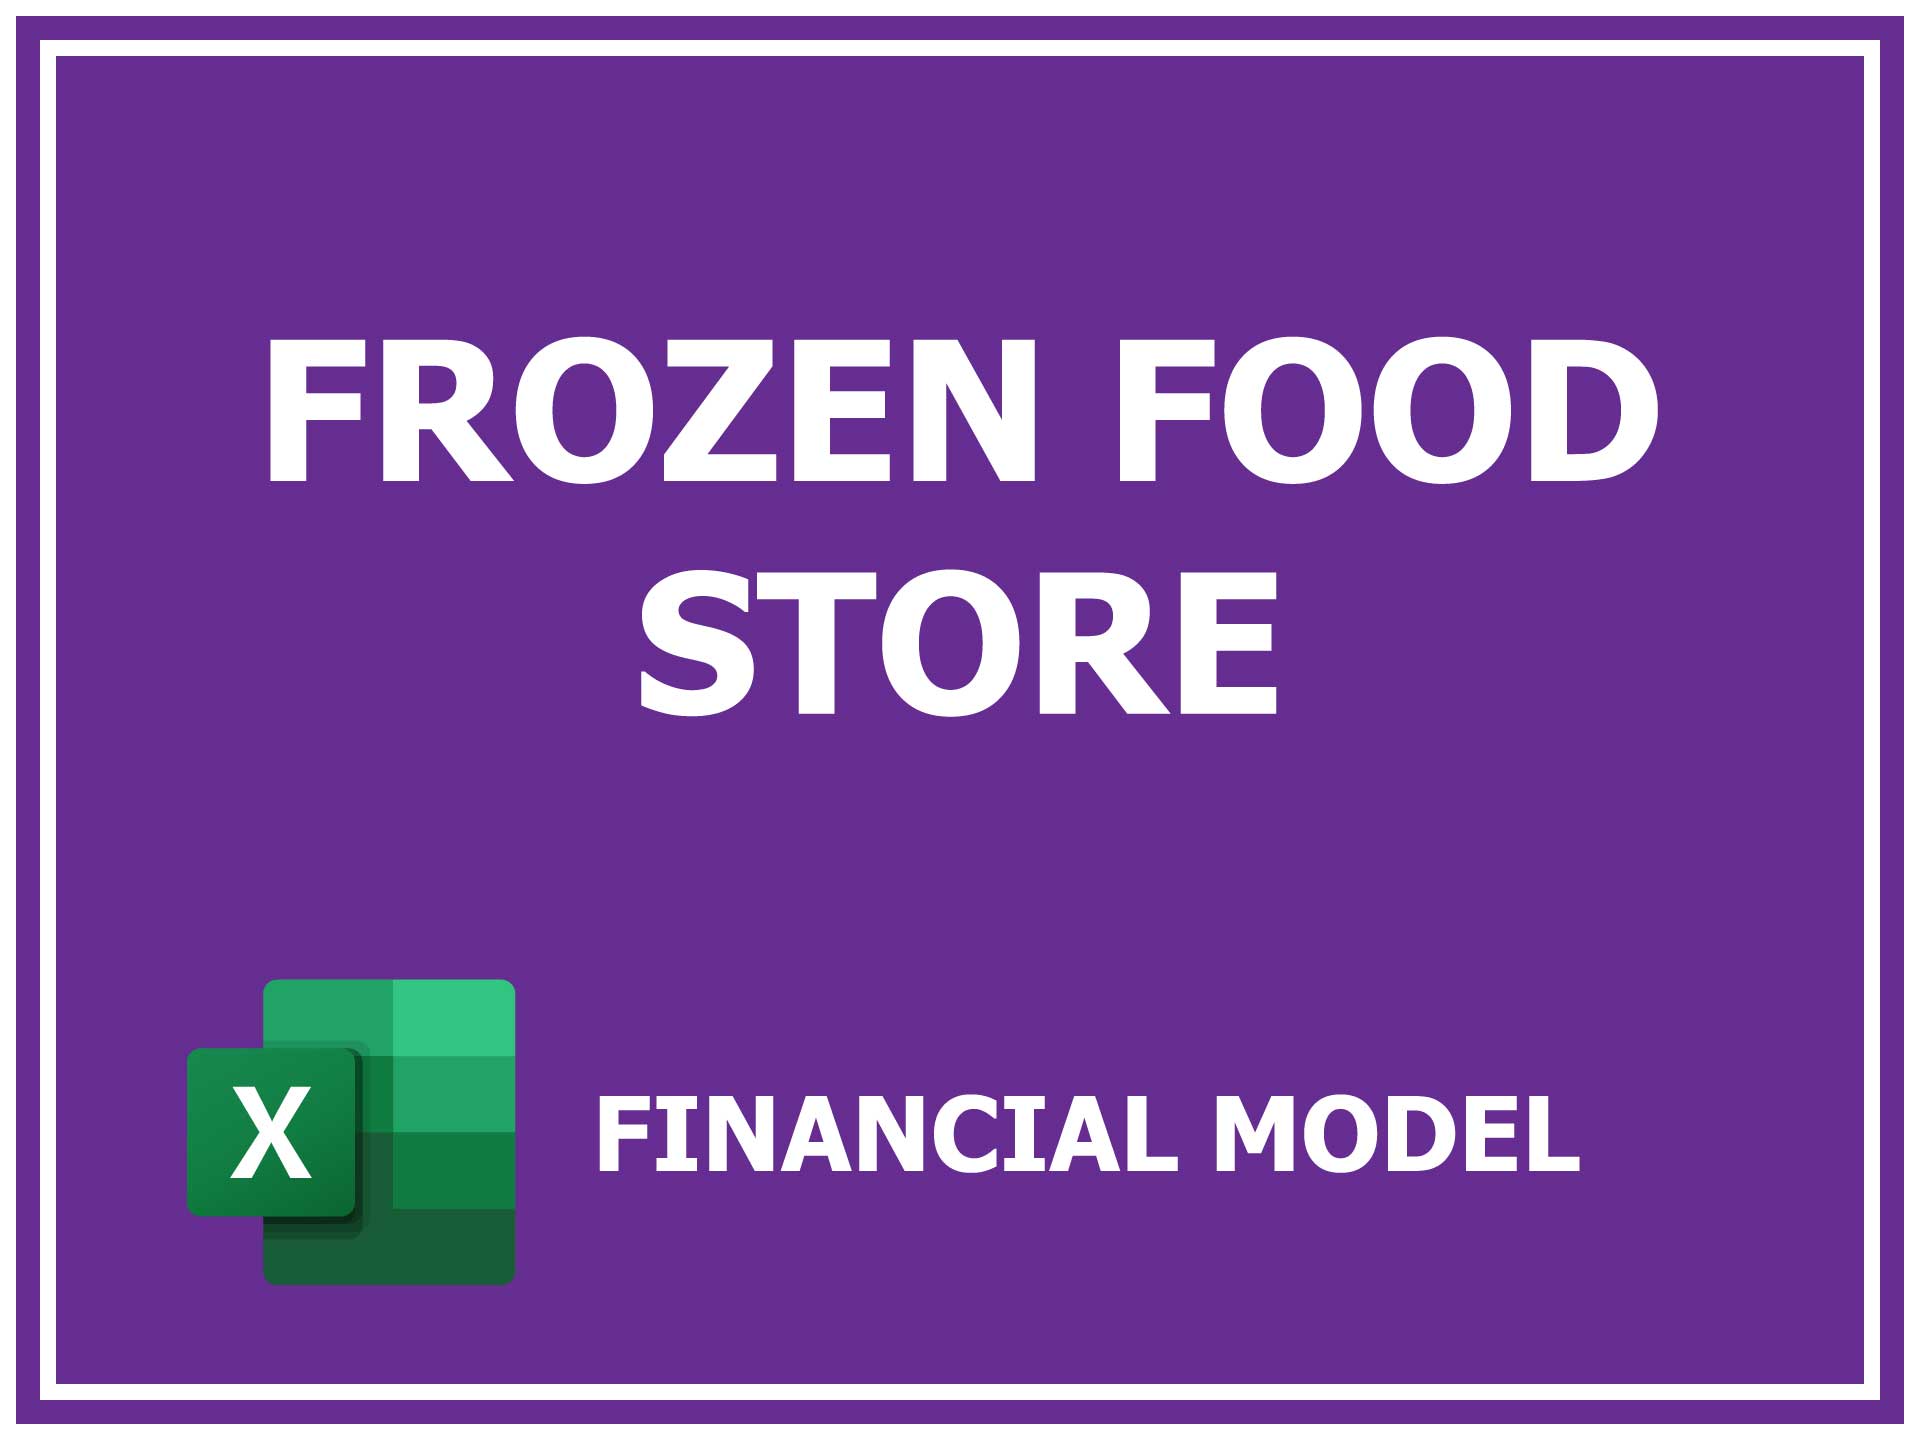 business plan of frozen food